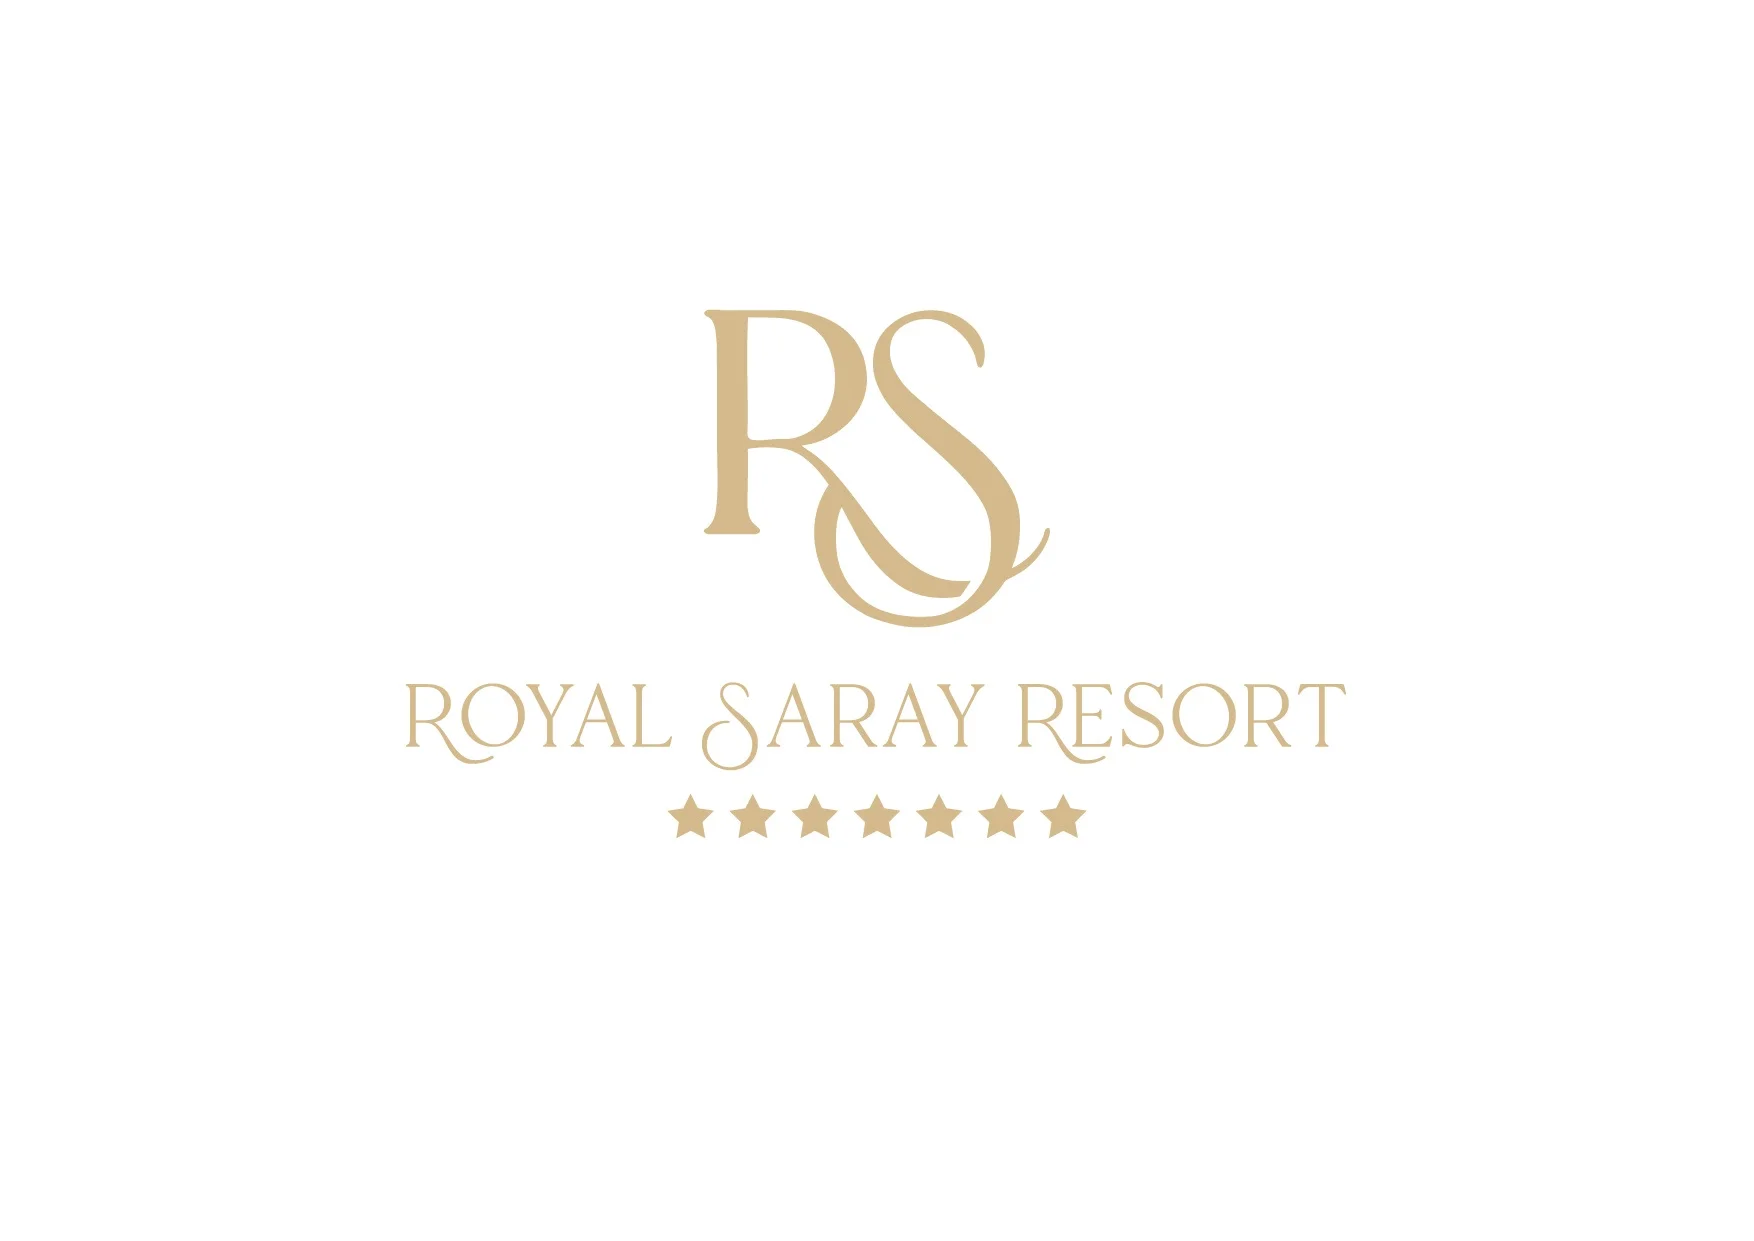 Royal Saray Resort RSR Logo